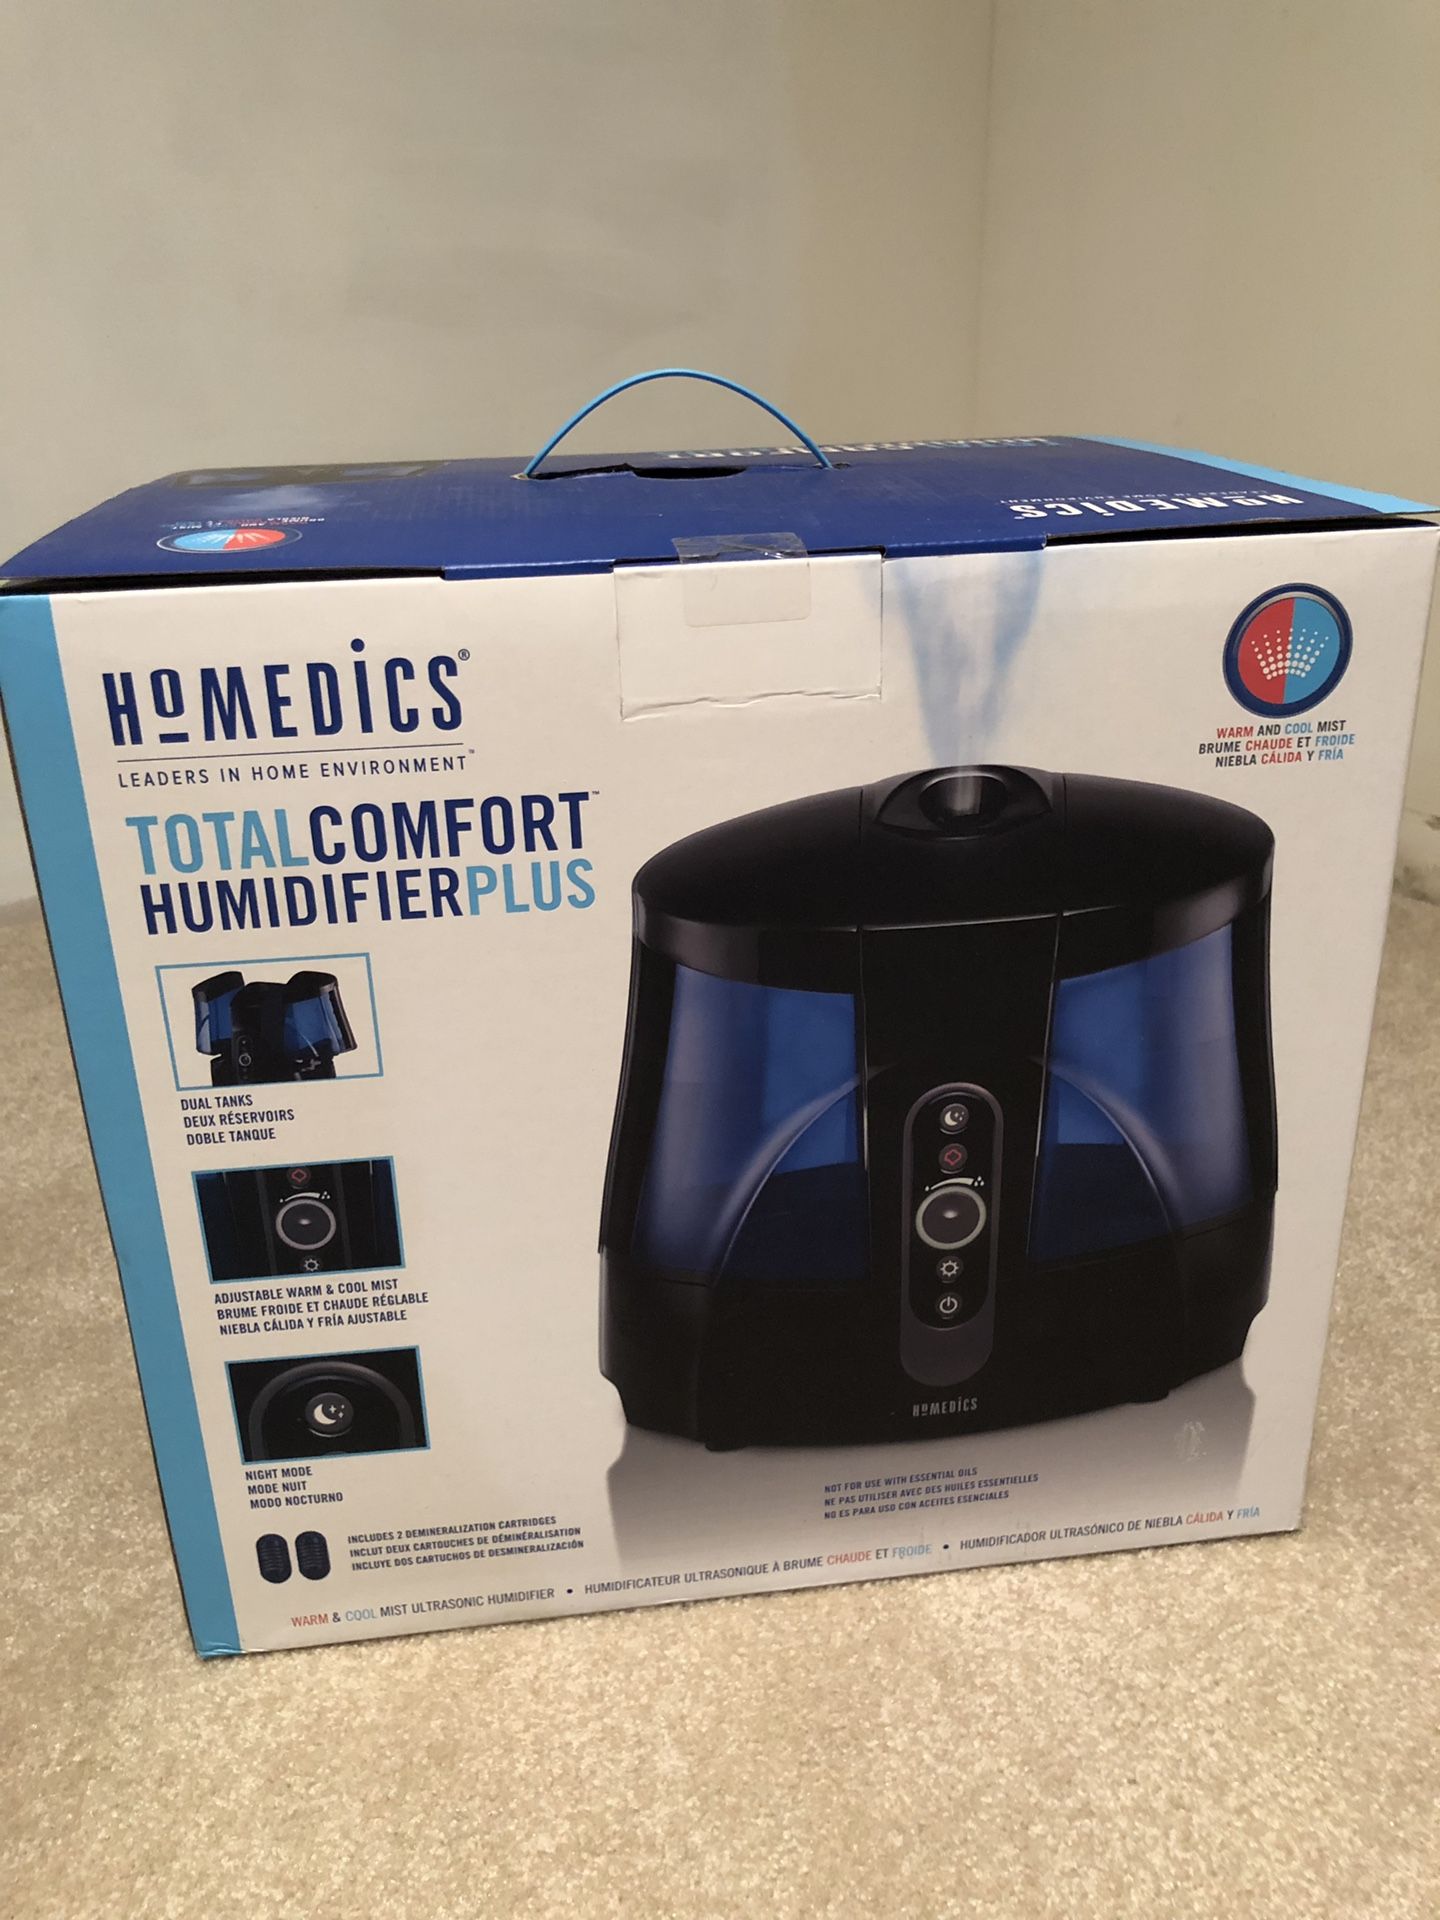 HoMedics TotalComfort Humidifier Plus